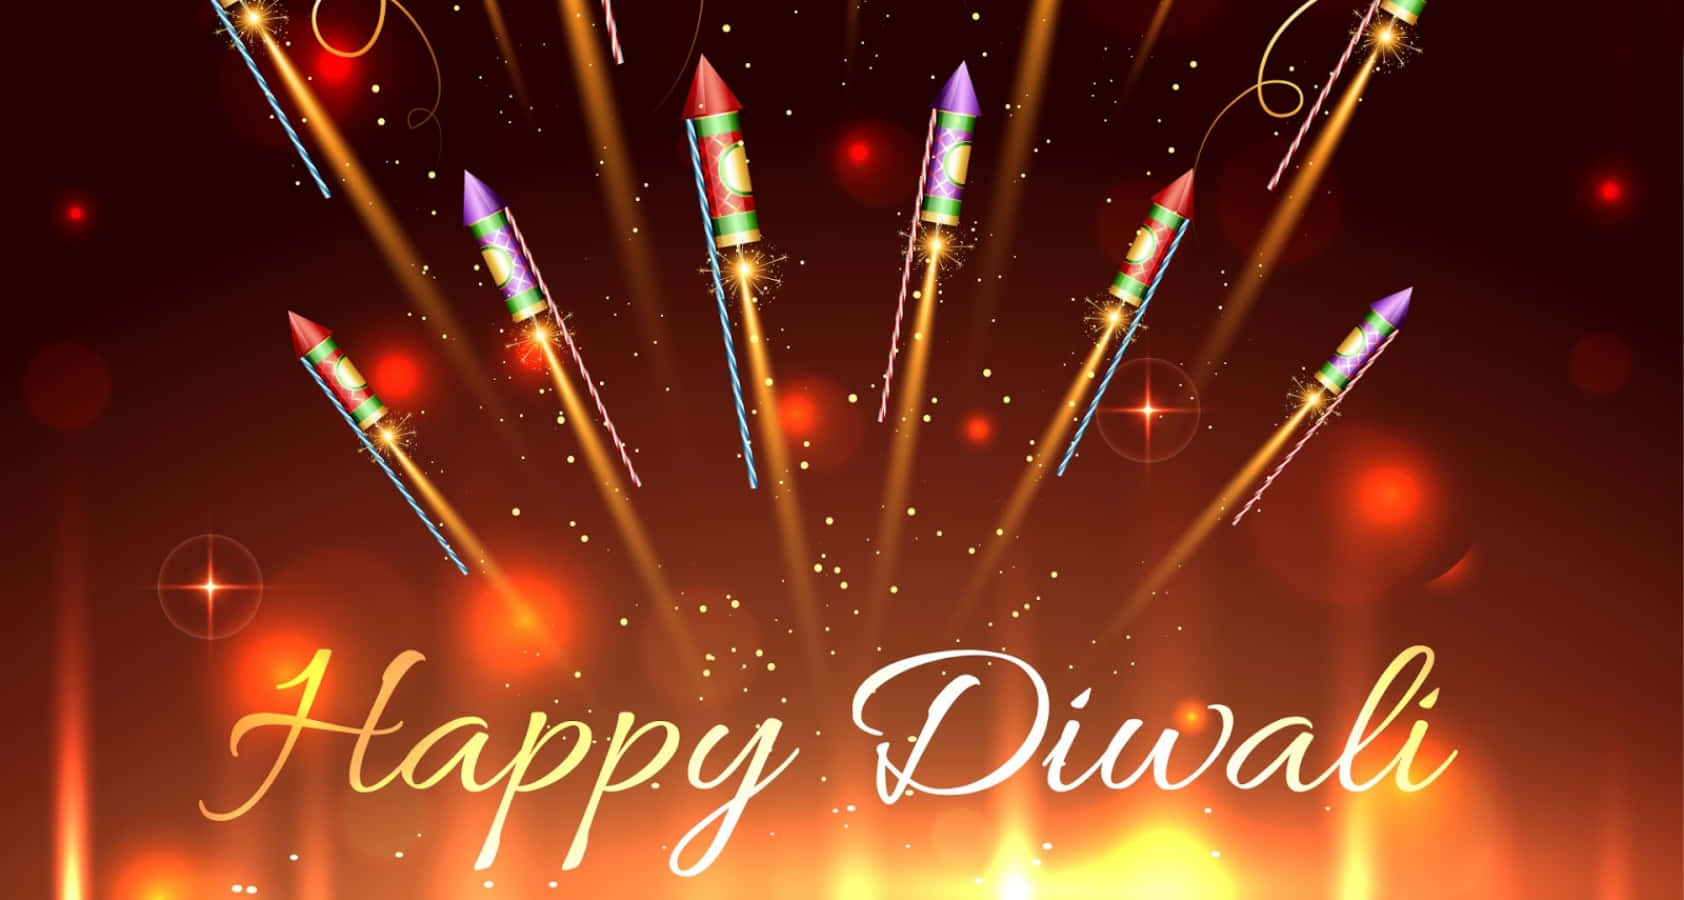 Happy Diwali to everyone!